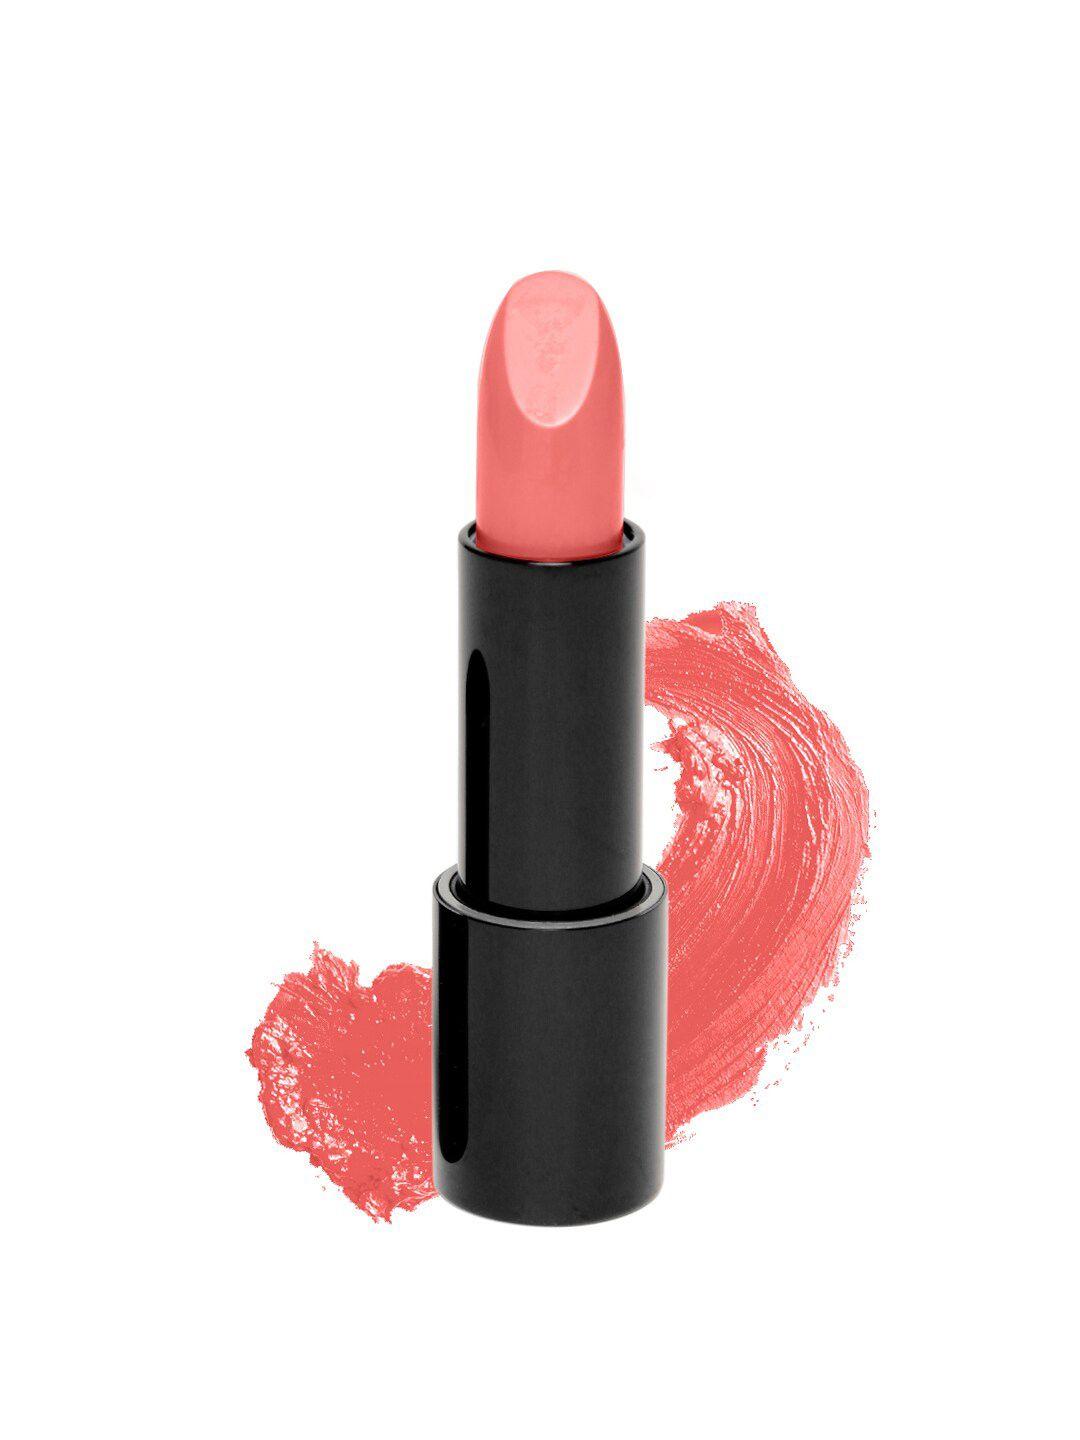 paese cosmetics lipstick with argan oil 4.3 g - 36